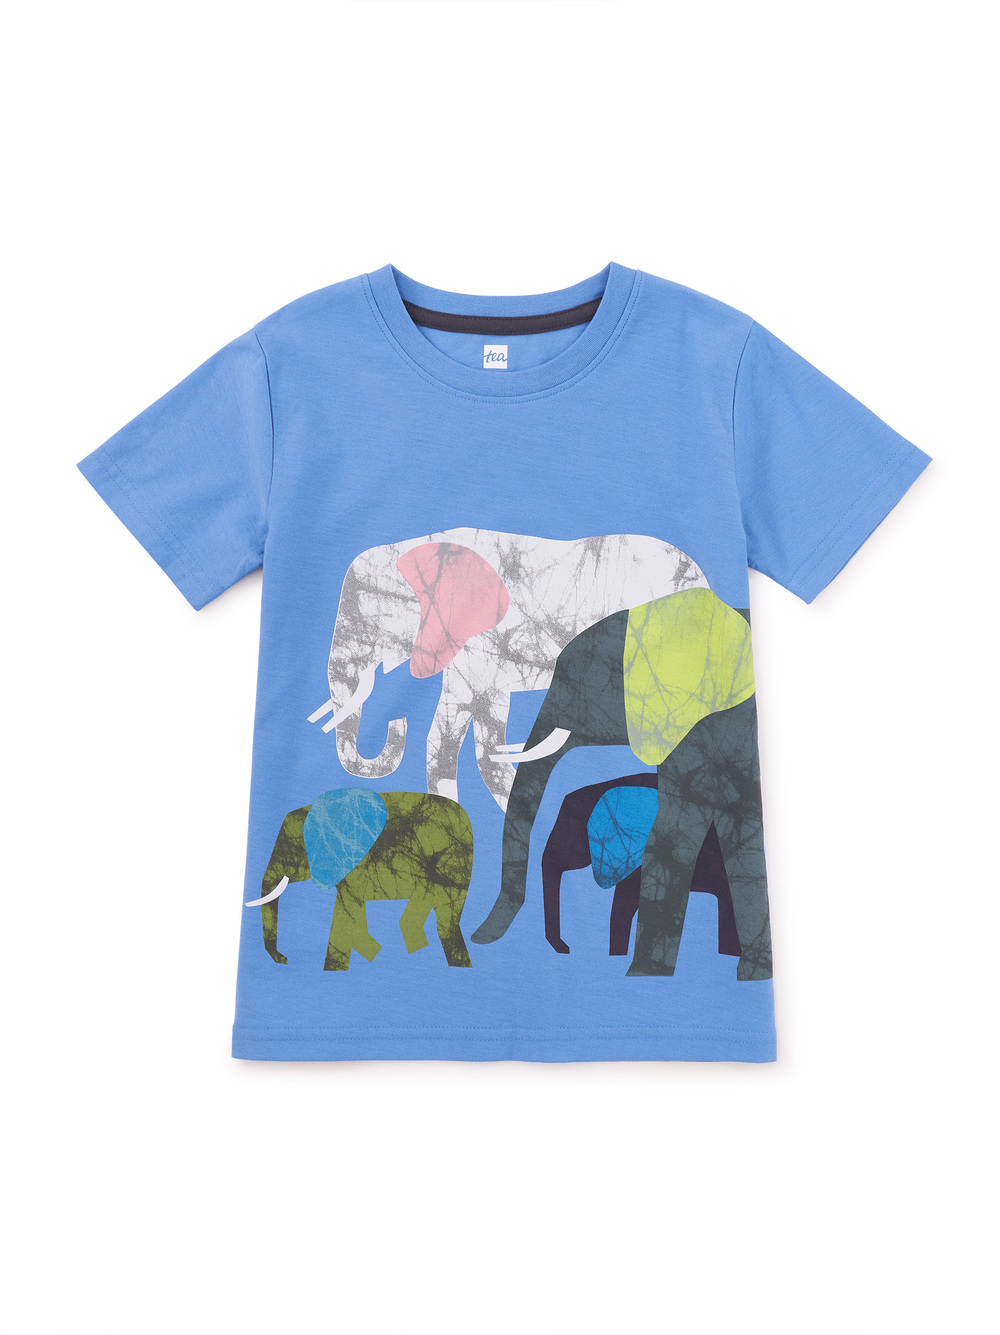 Elephants Graphic Tee